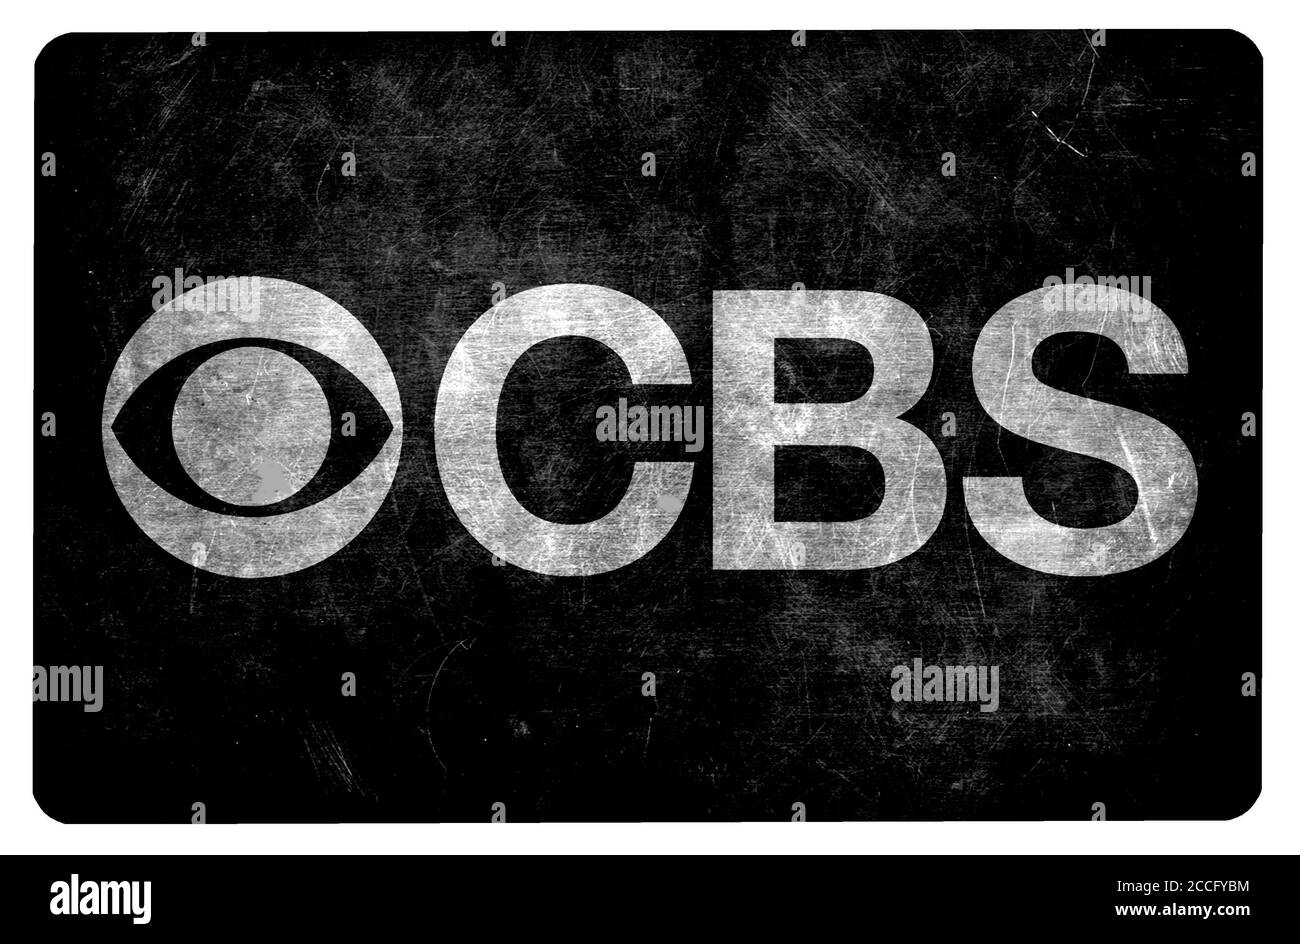 CBS News logo Stock Photo